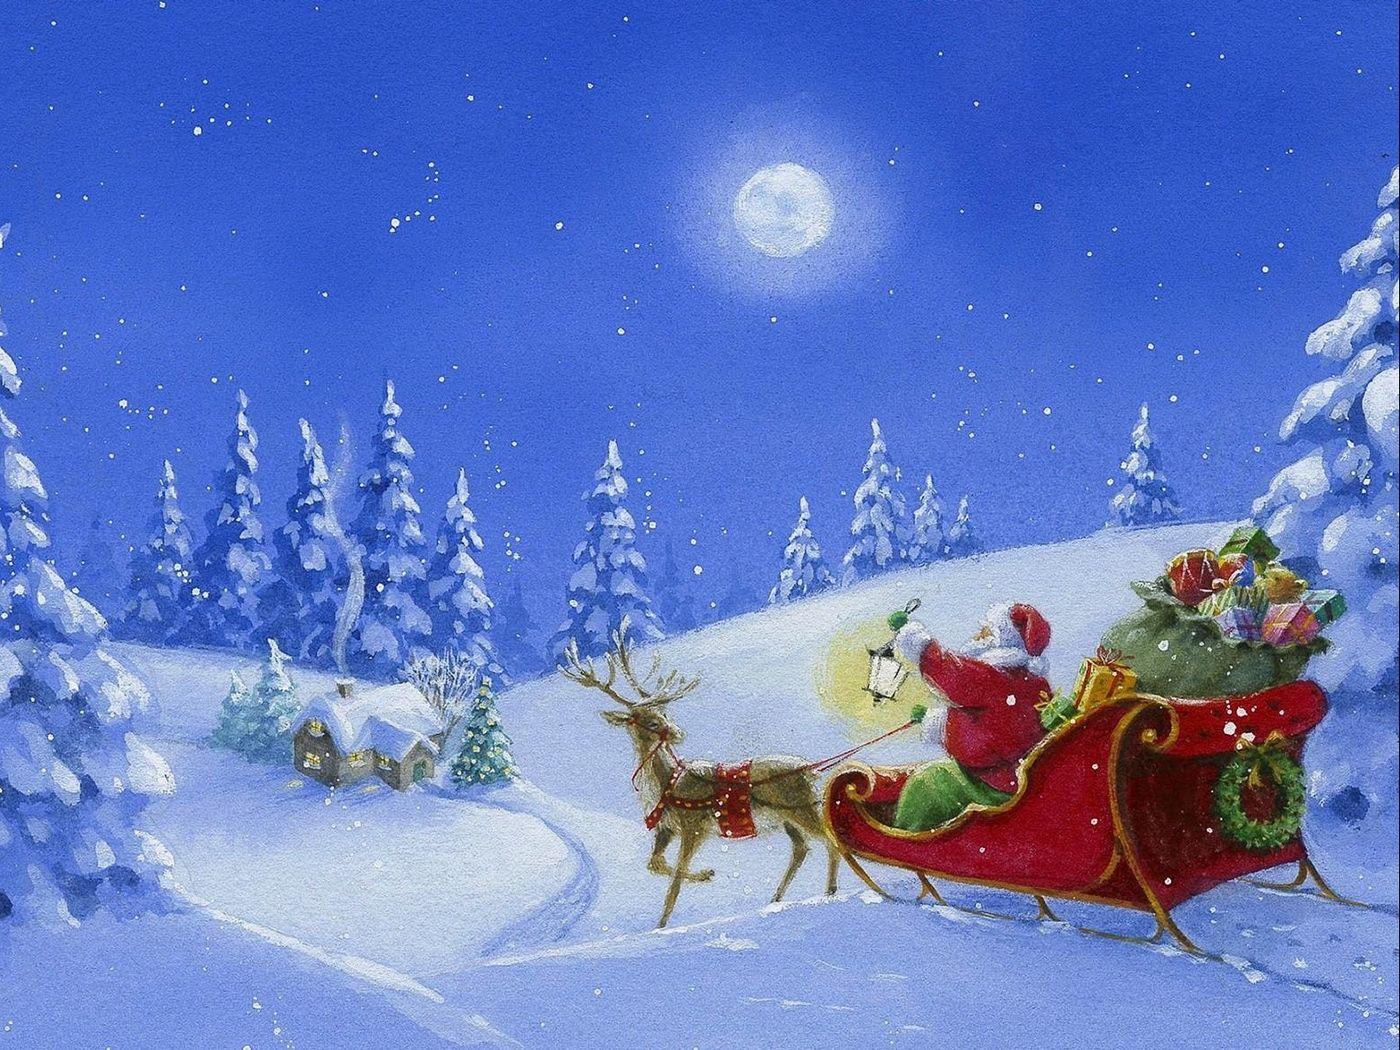 Download wallpaper 1400x1050 santa claus, reindeer, sleigh, gifts